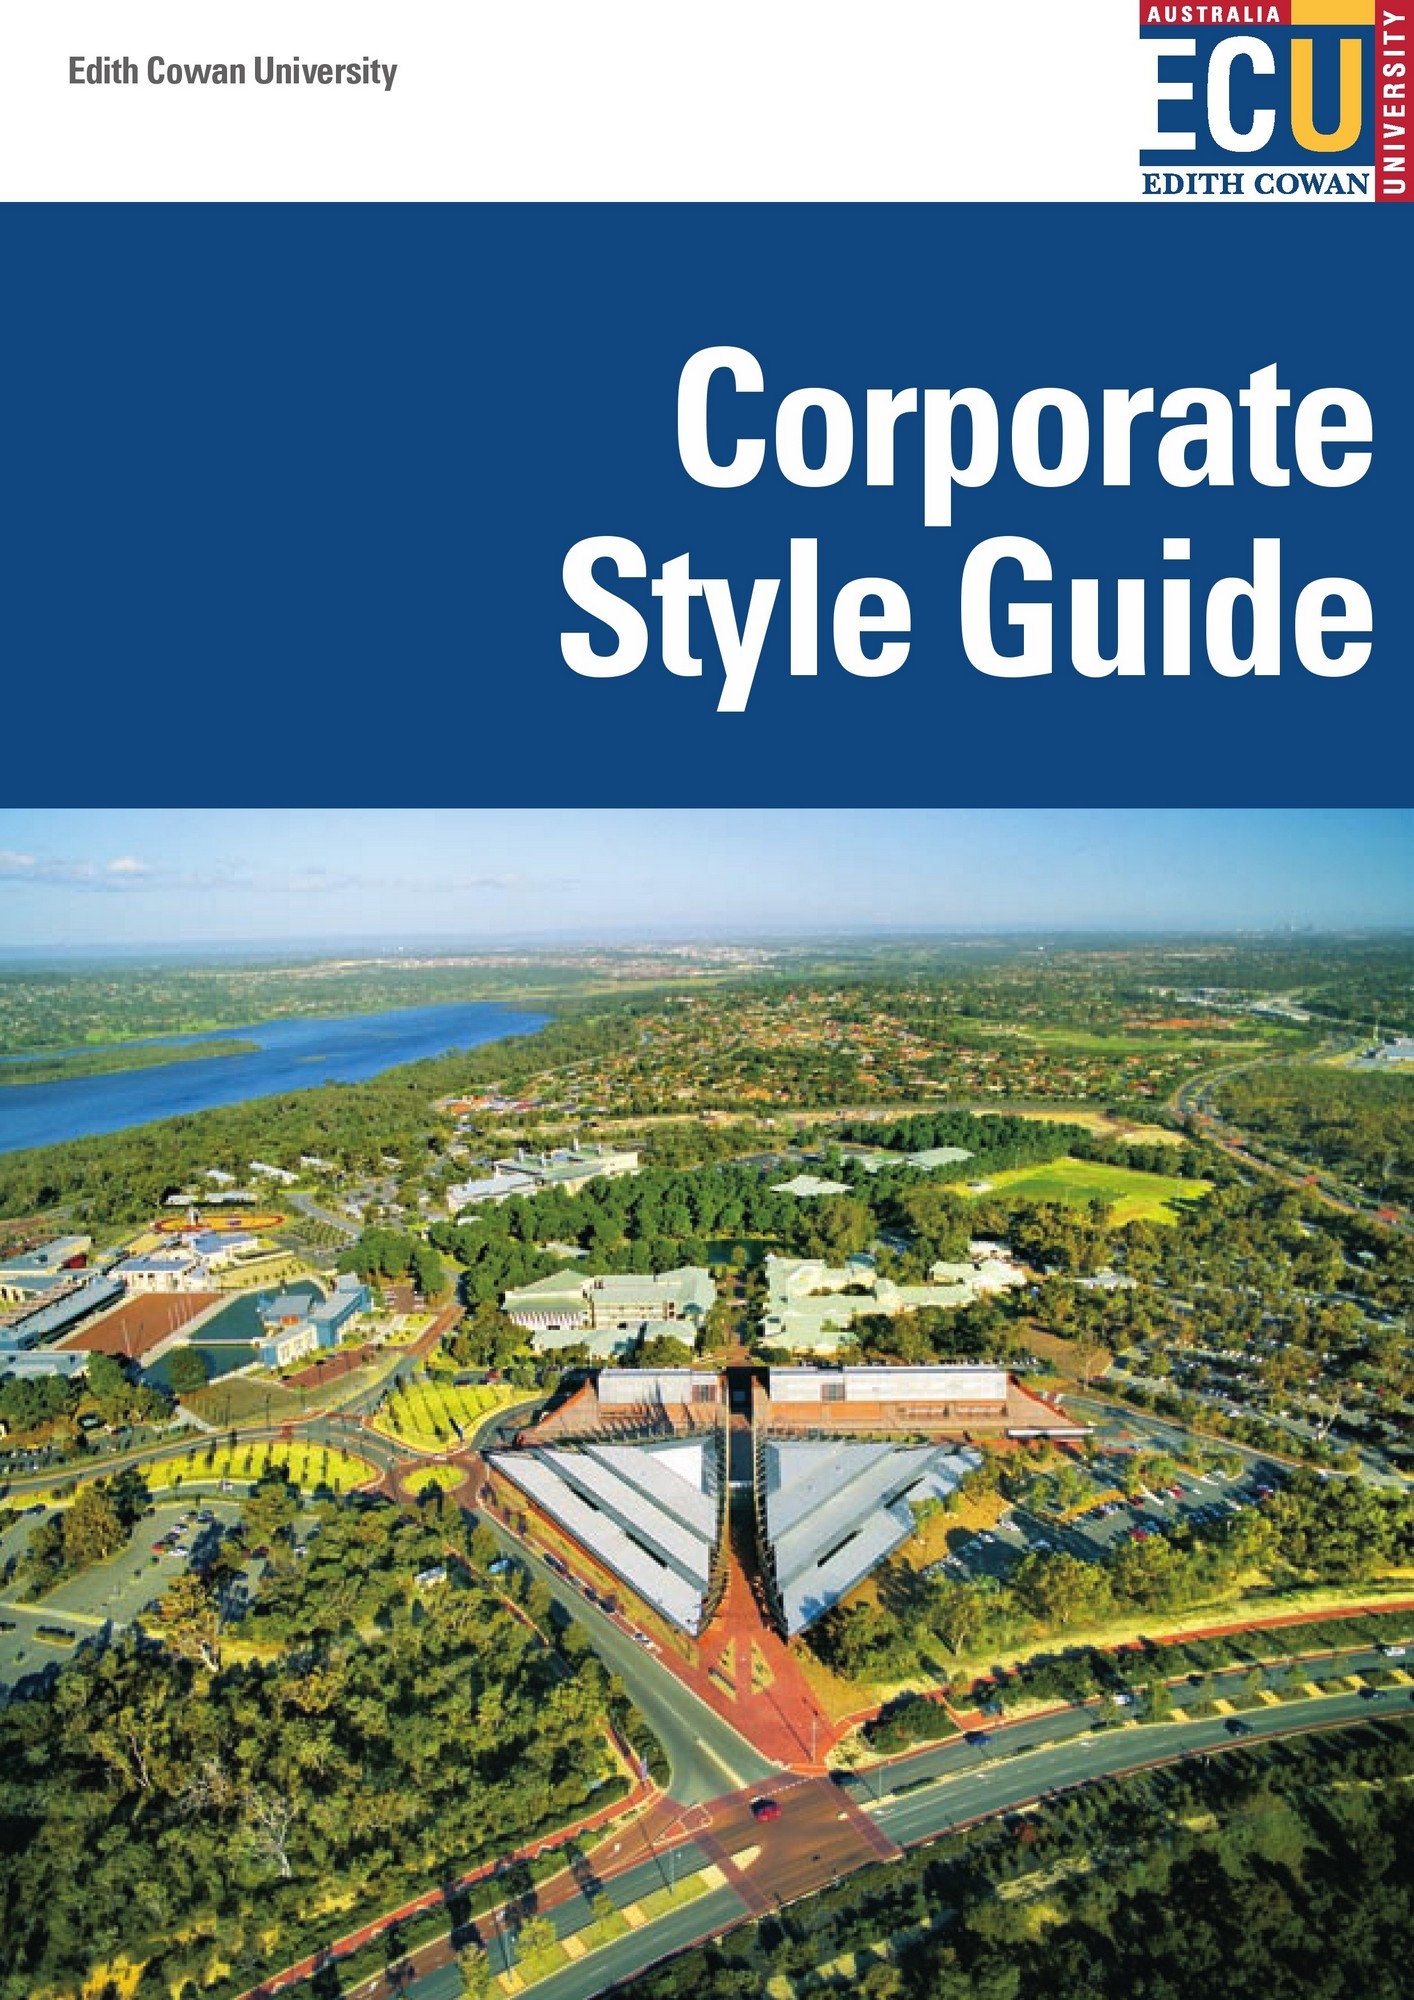 Edith Cowan University Corporate Style Guide